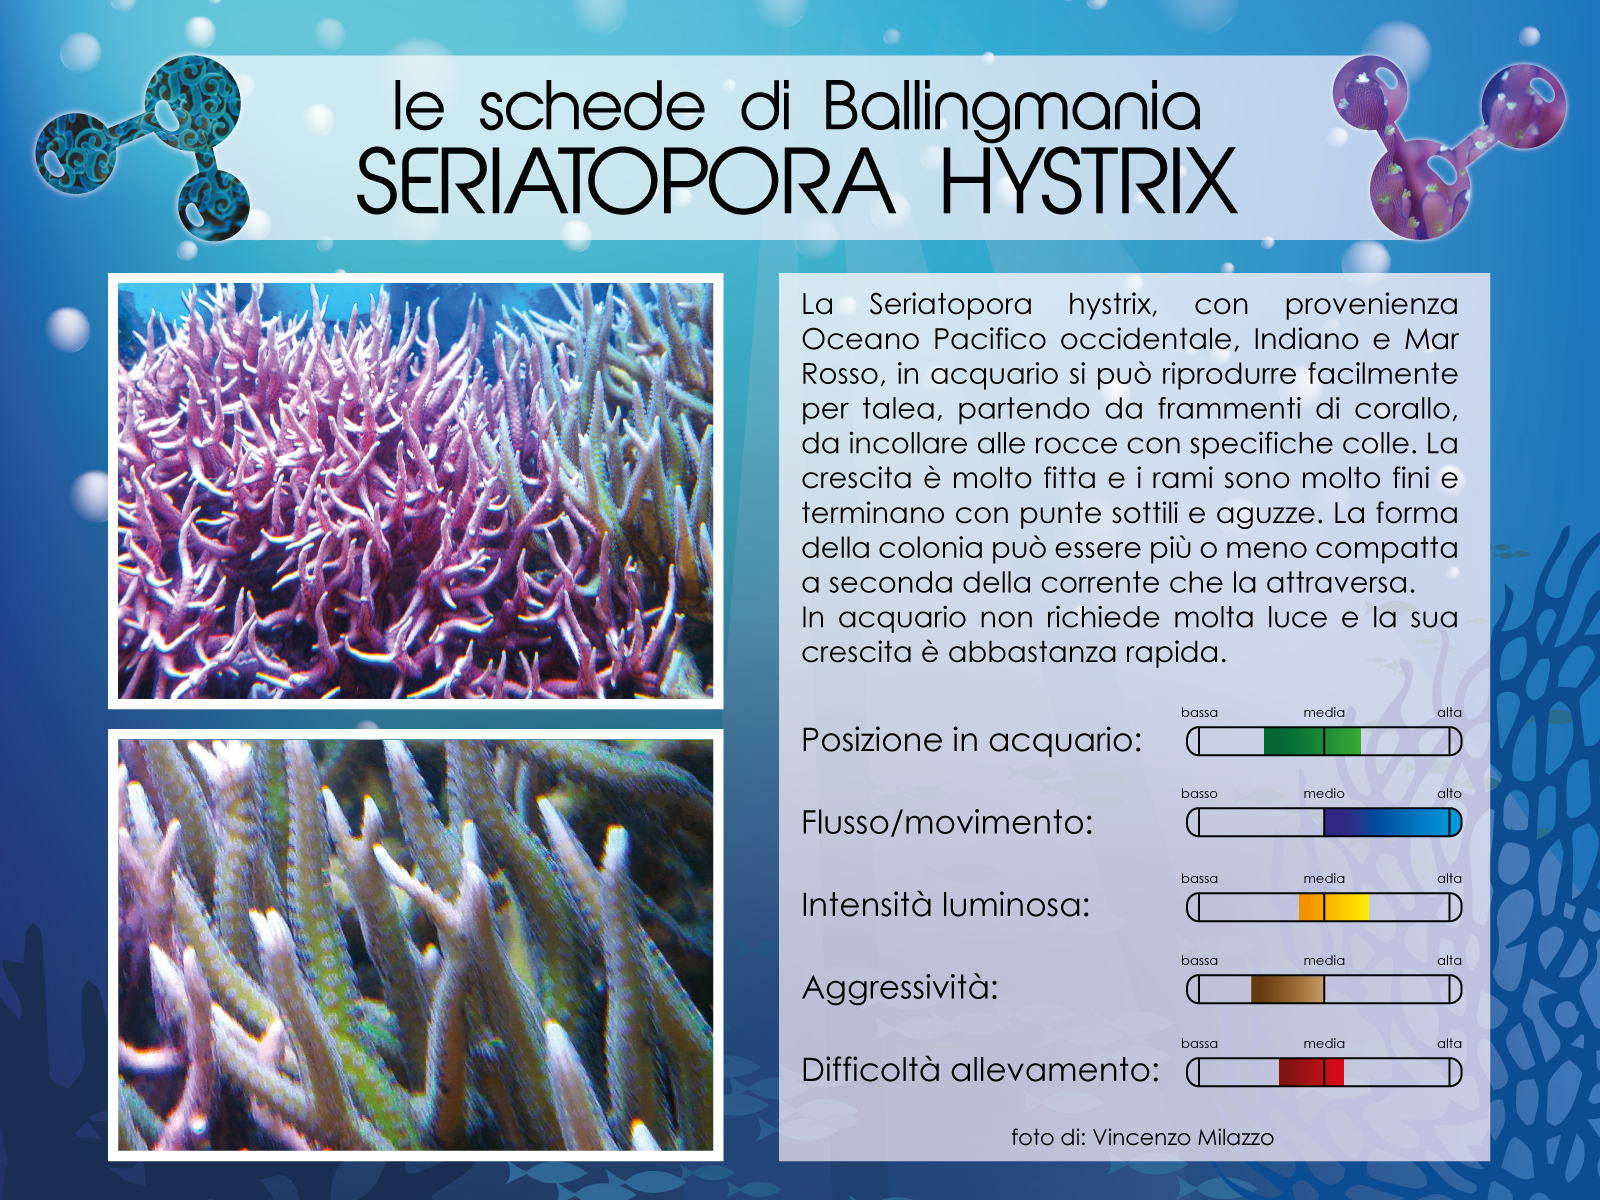 Seriatopora Hystrix